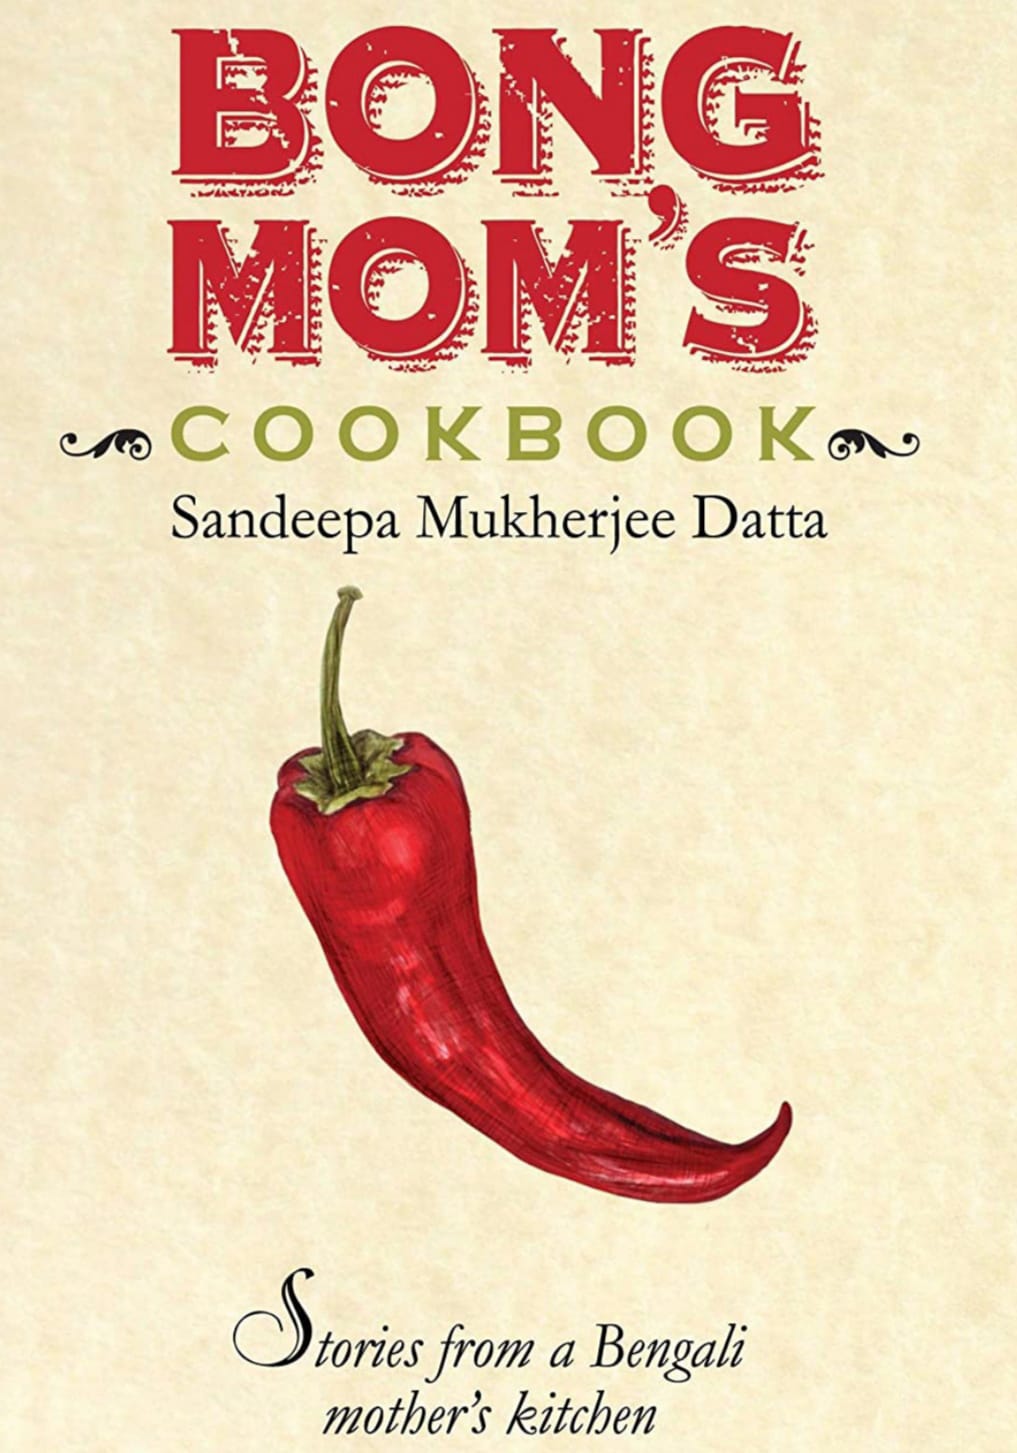 Bong Mom's CookBook